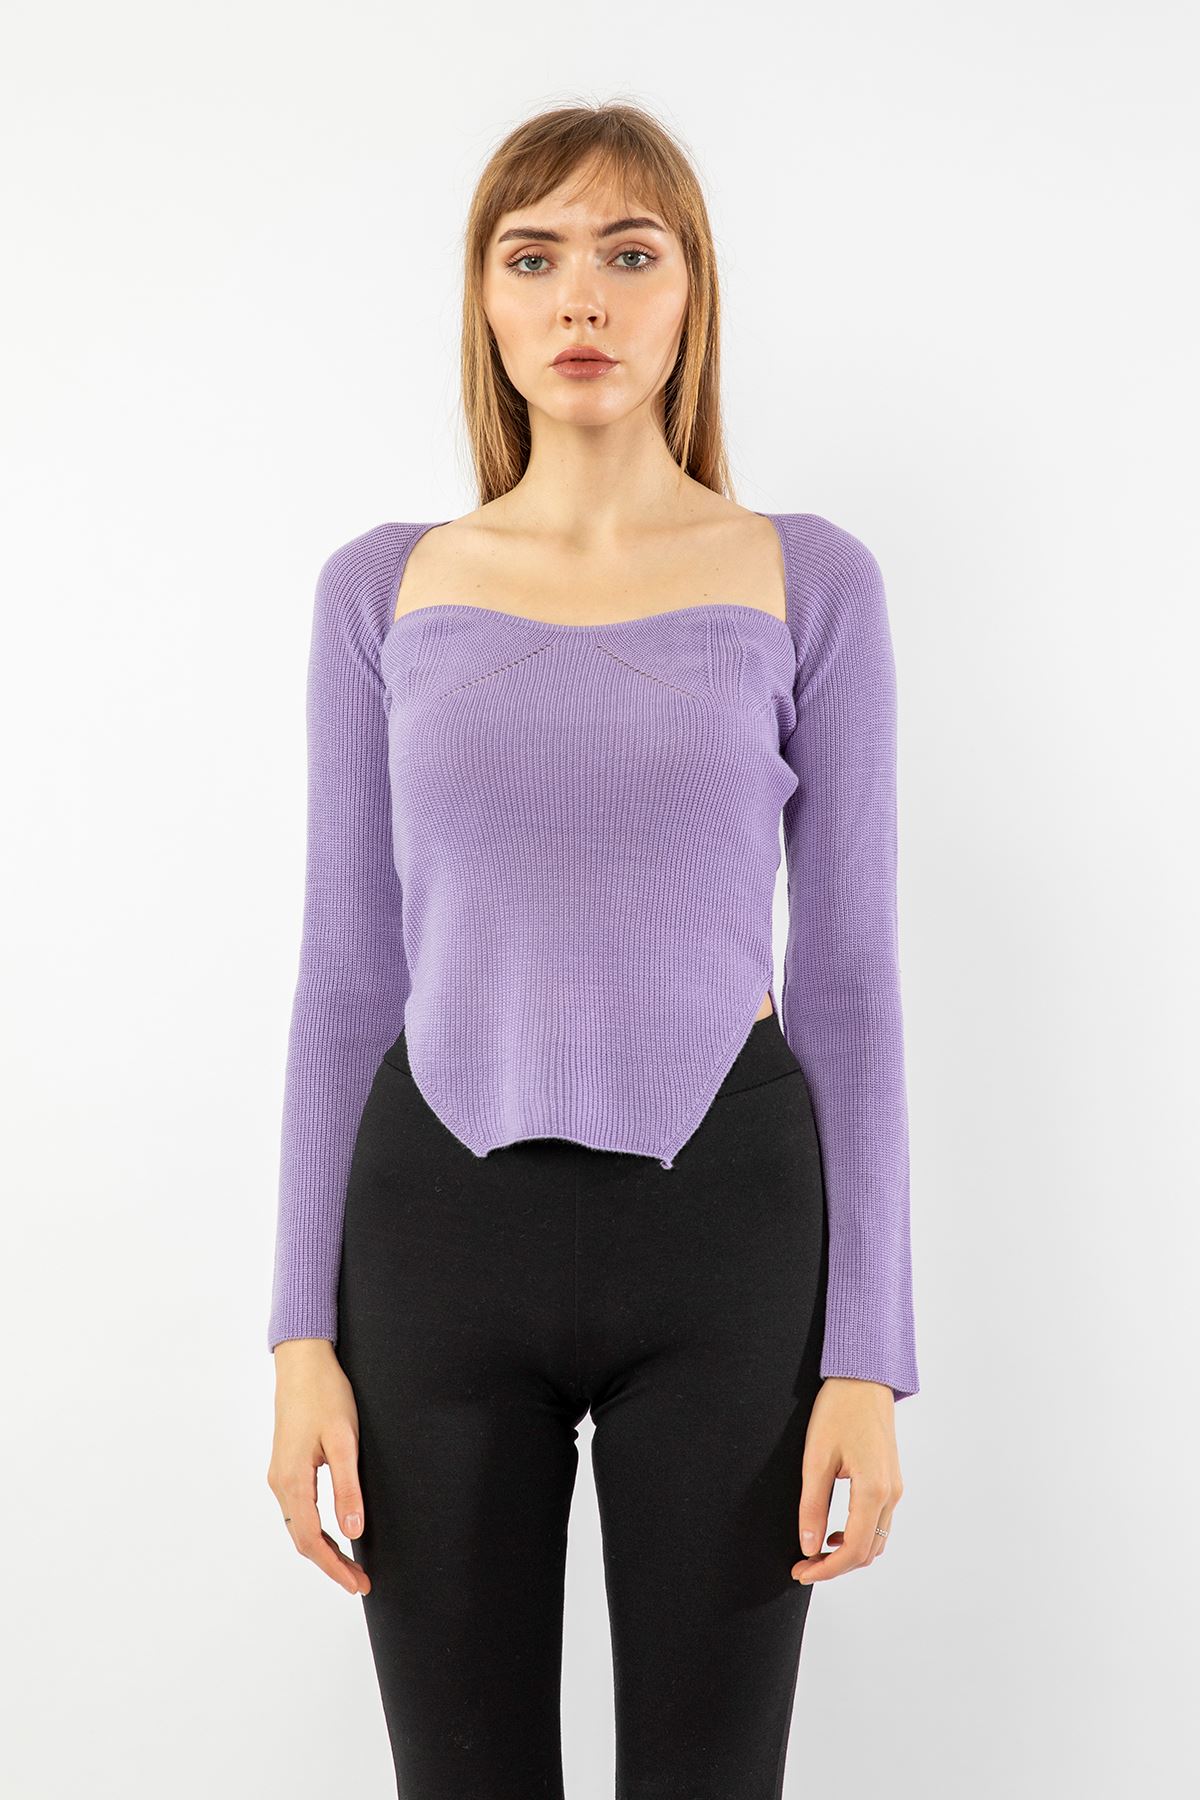 Knitwear Fabric Queen Anna Neck Short Tight Fit Asymmetric Women Sweater - Lilac